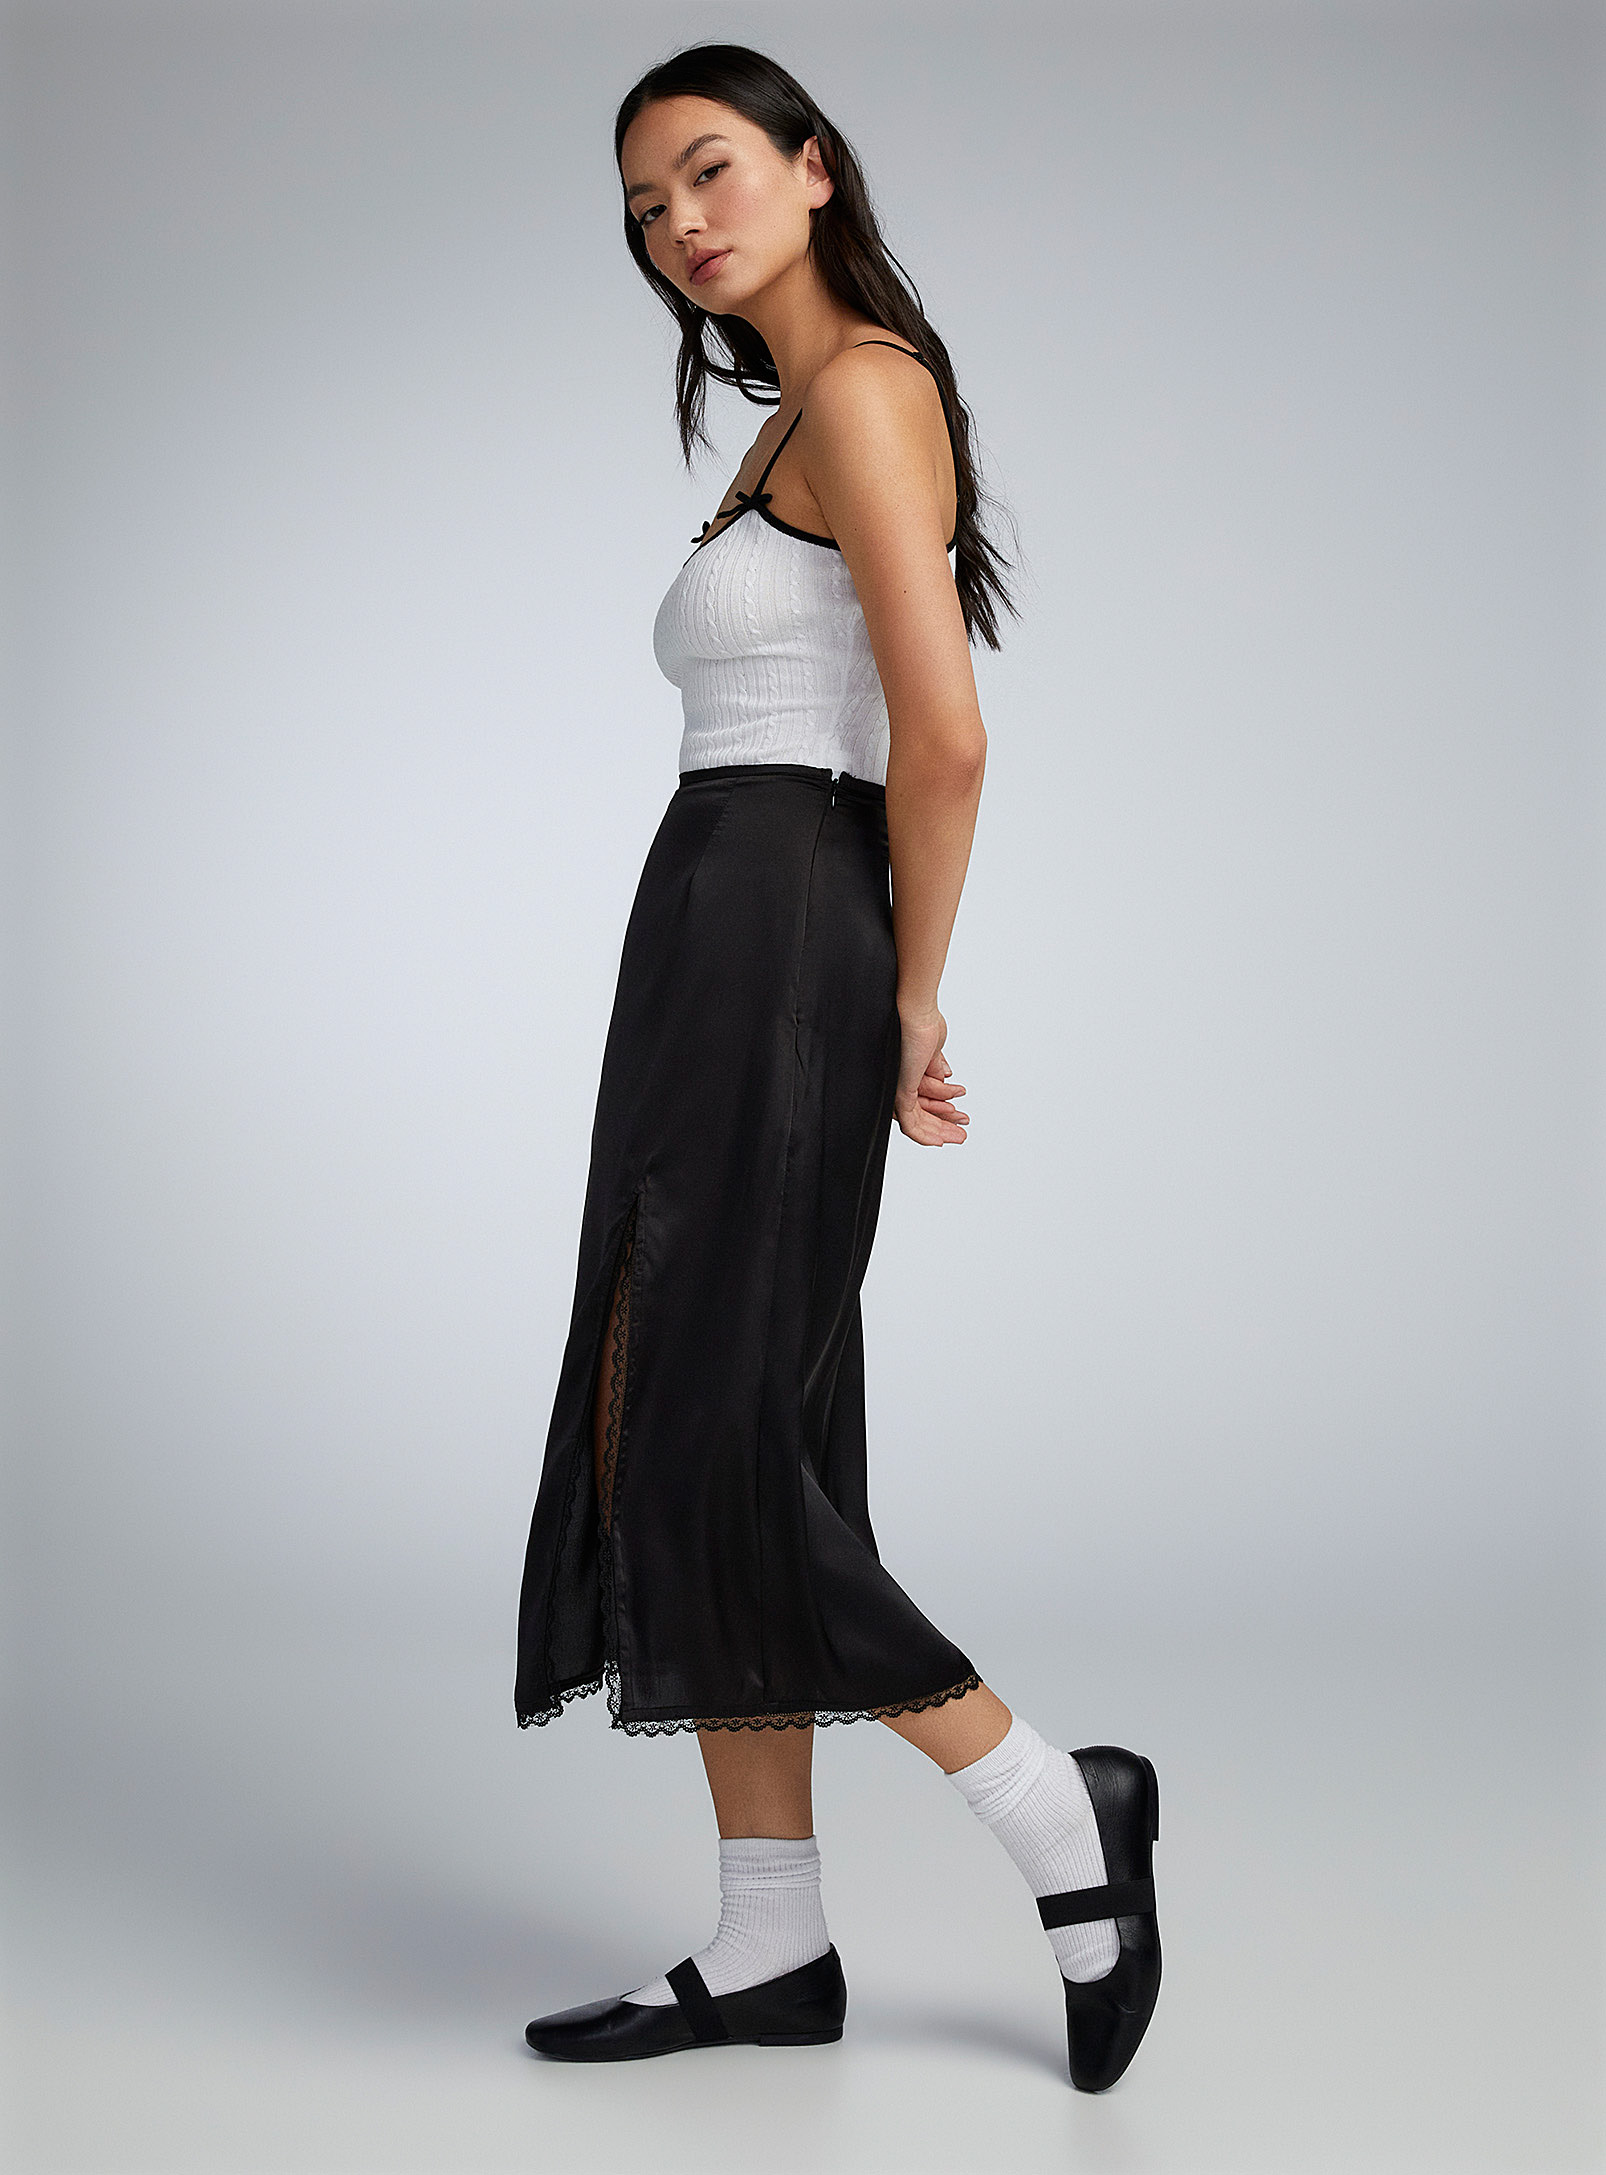 Twik Lace Trim Satiny Skirt In Black